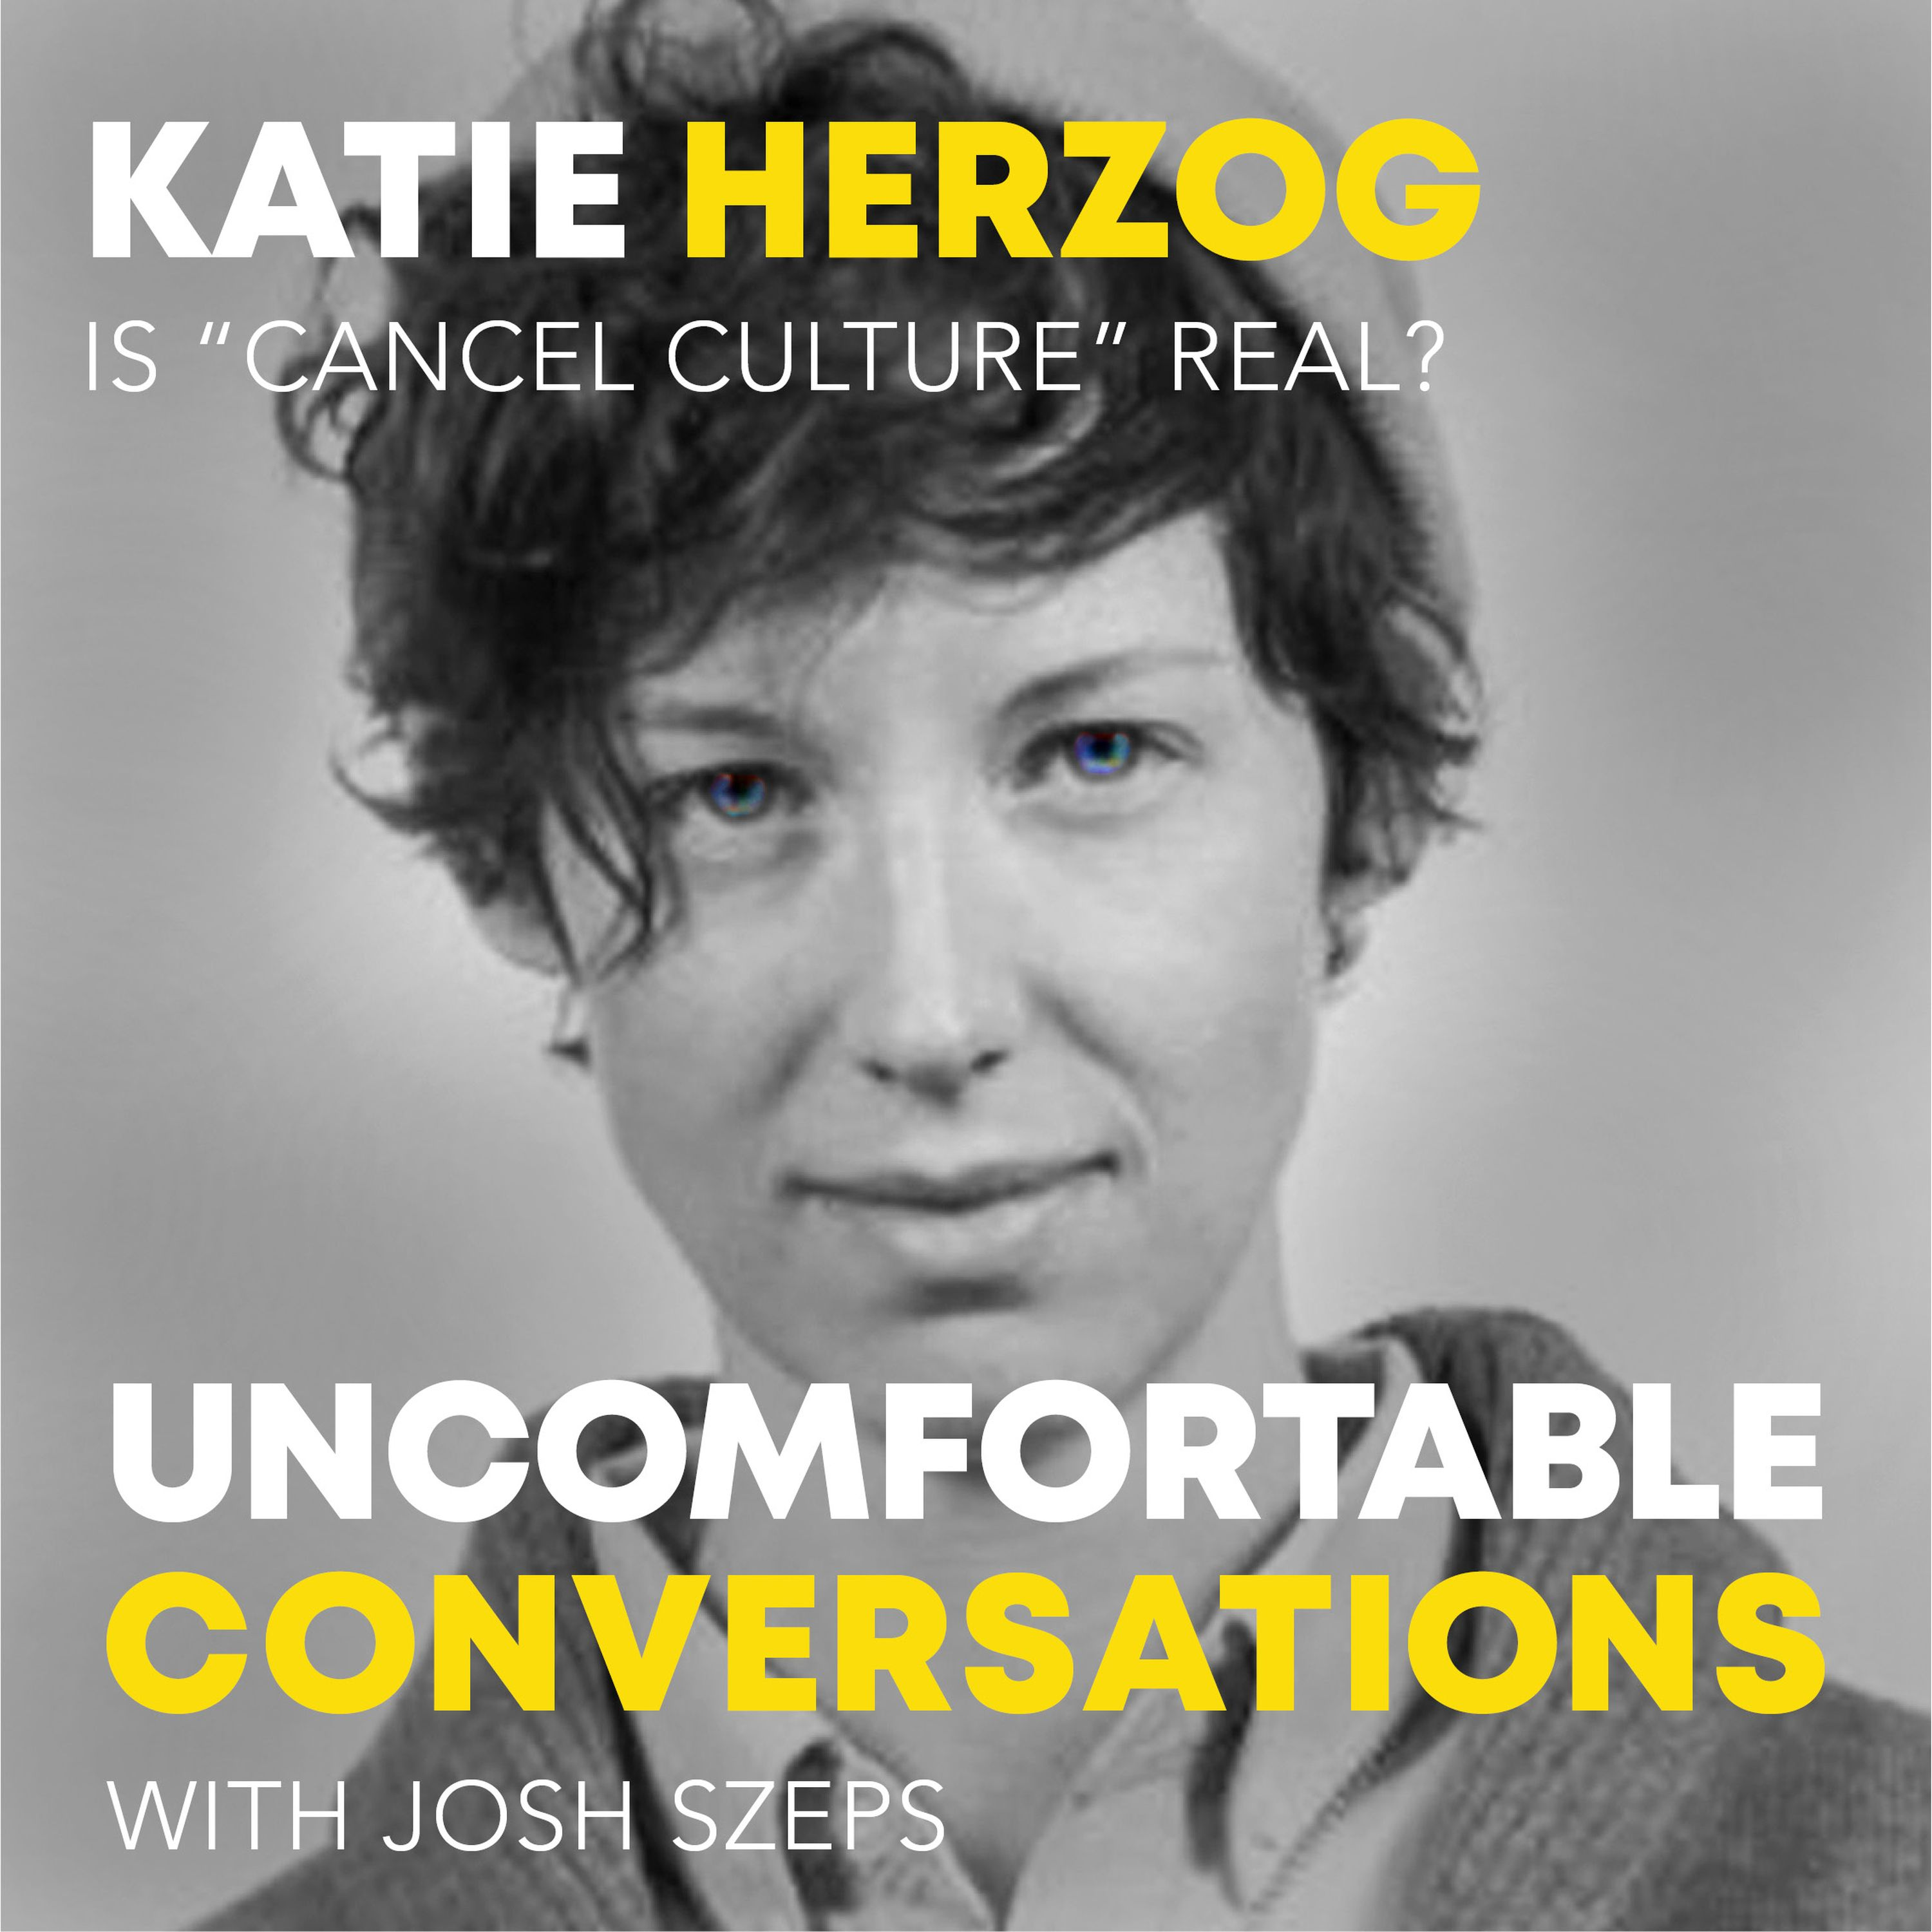 "Is Cancel Culture Real?" with Katie Herzog